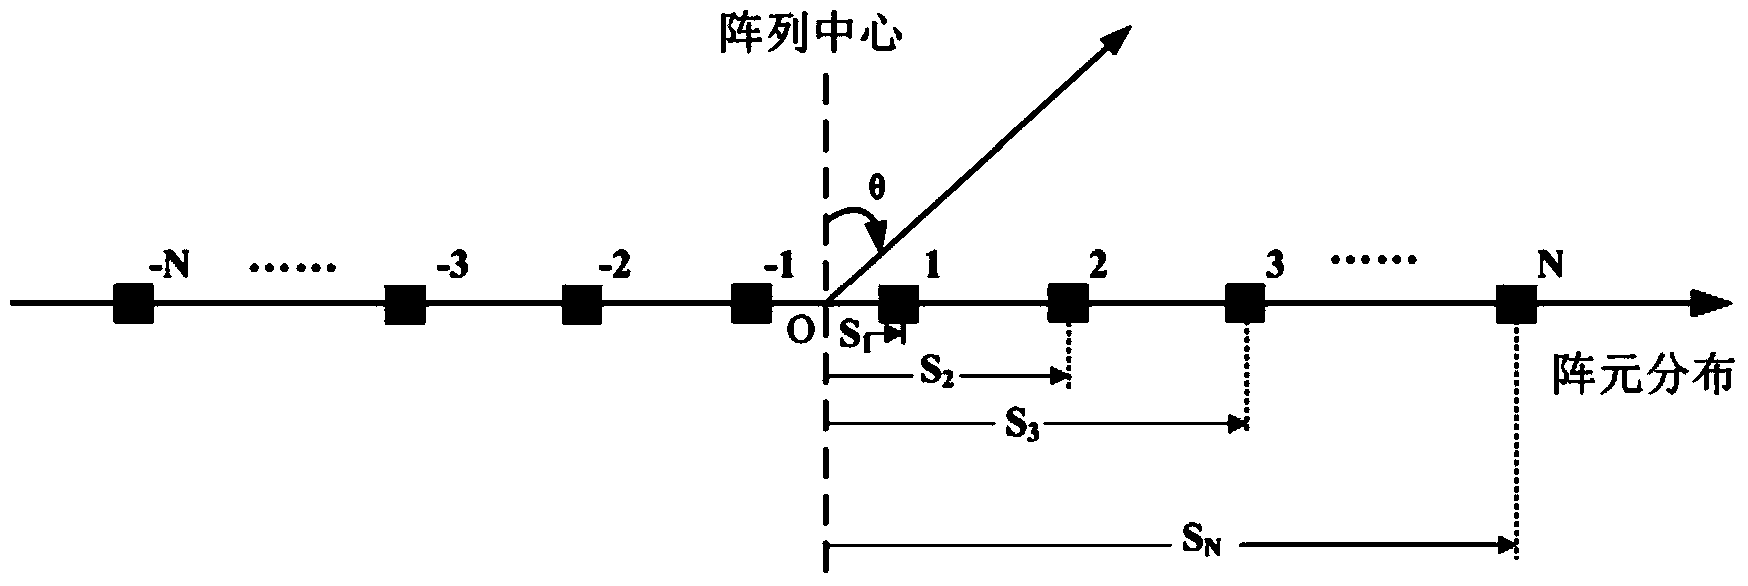 Method for designing Taylor-index composite non-equidistant modular array antenna